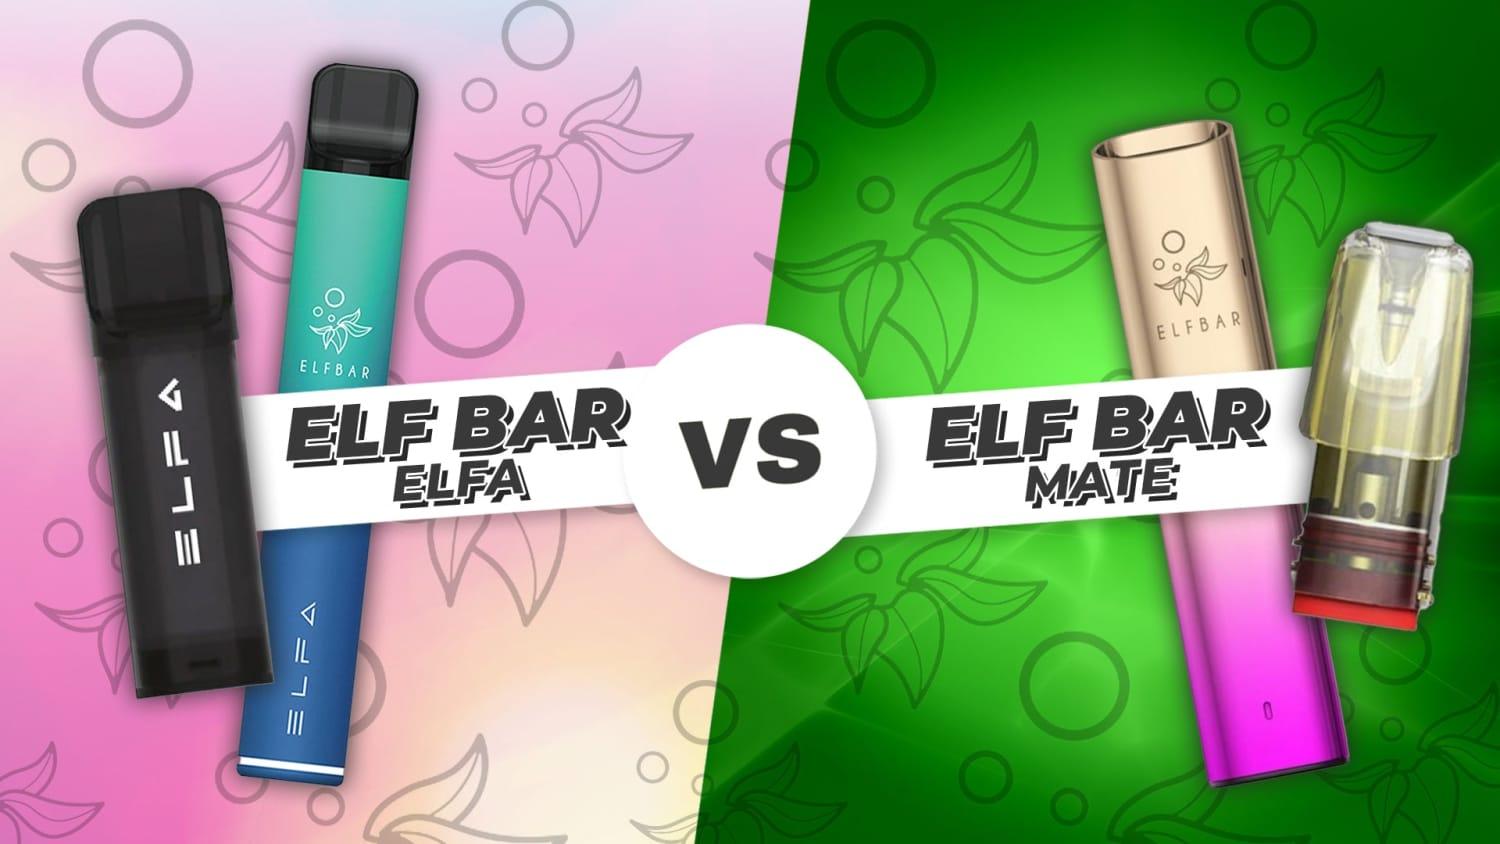 Elf Bar Elfa VS Elf Bar Mate 500 - Brand:Elf Bar, Category:Vape Kits, Sub Category:Pod Kits, Sub Category:Starter Kits